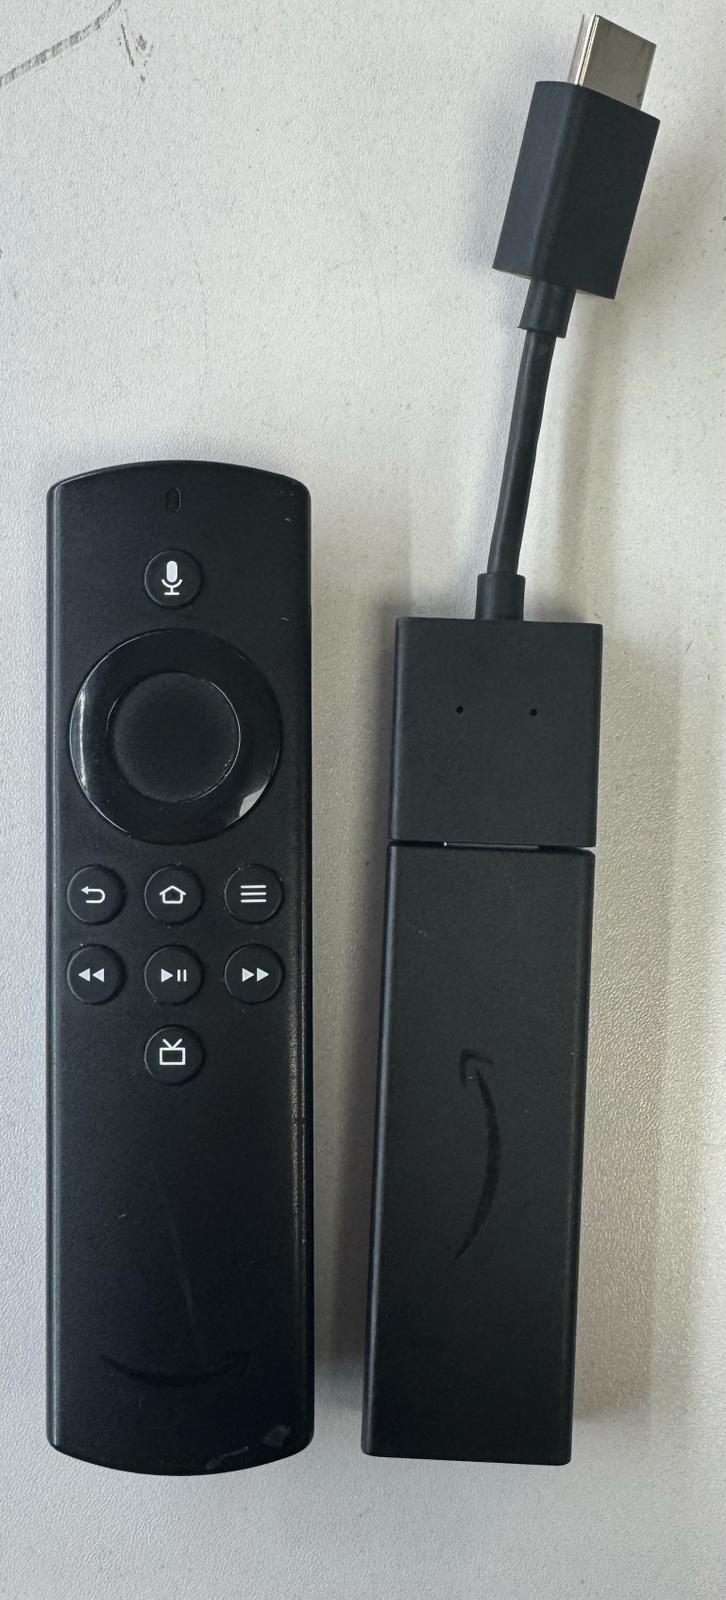 Amazon Fire TV Stick Lite with Alexa Voice Remote - Black (S3L46N)